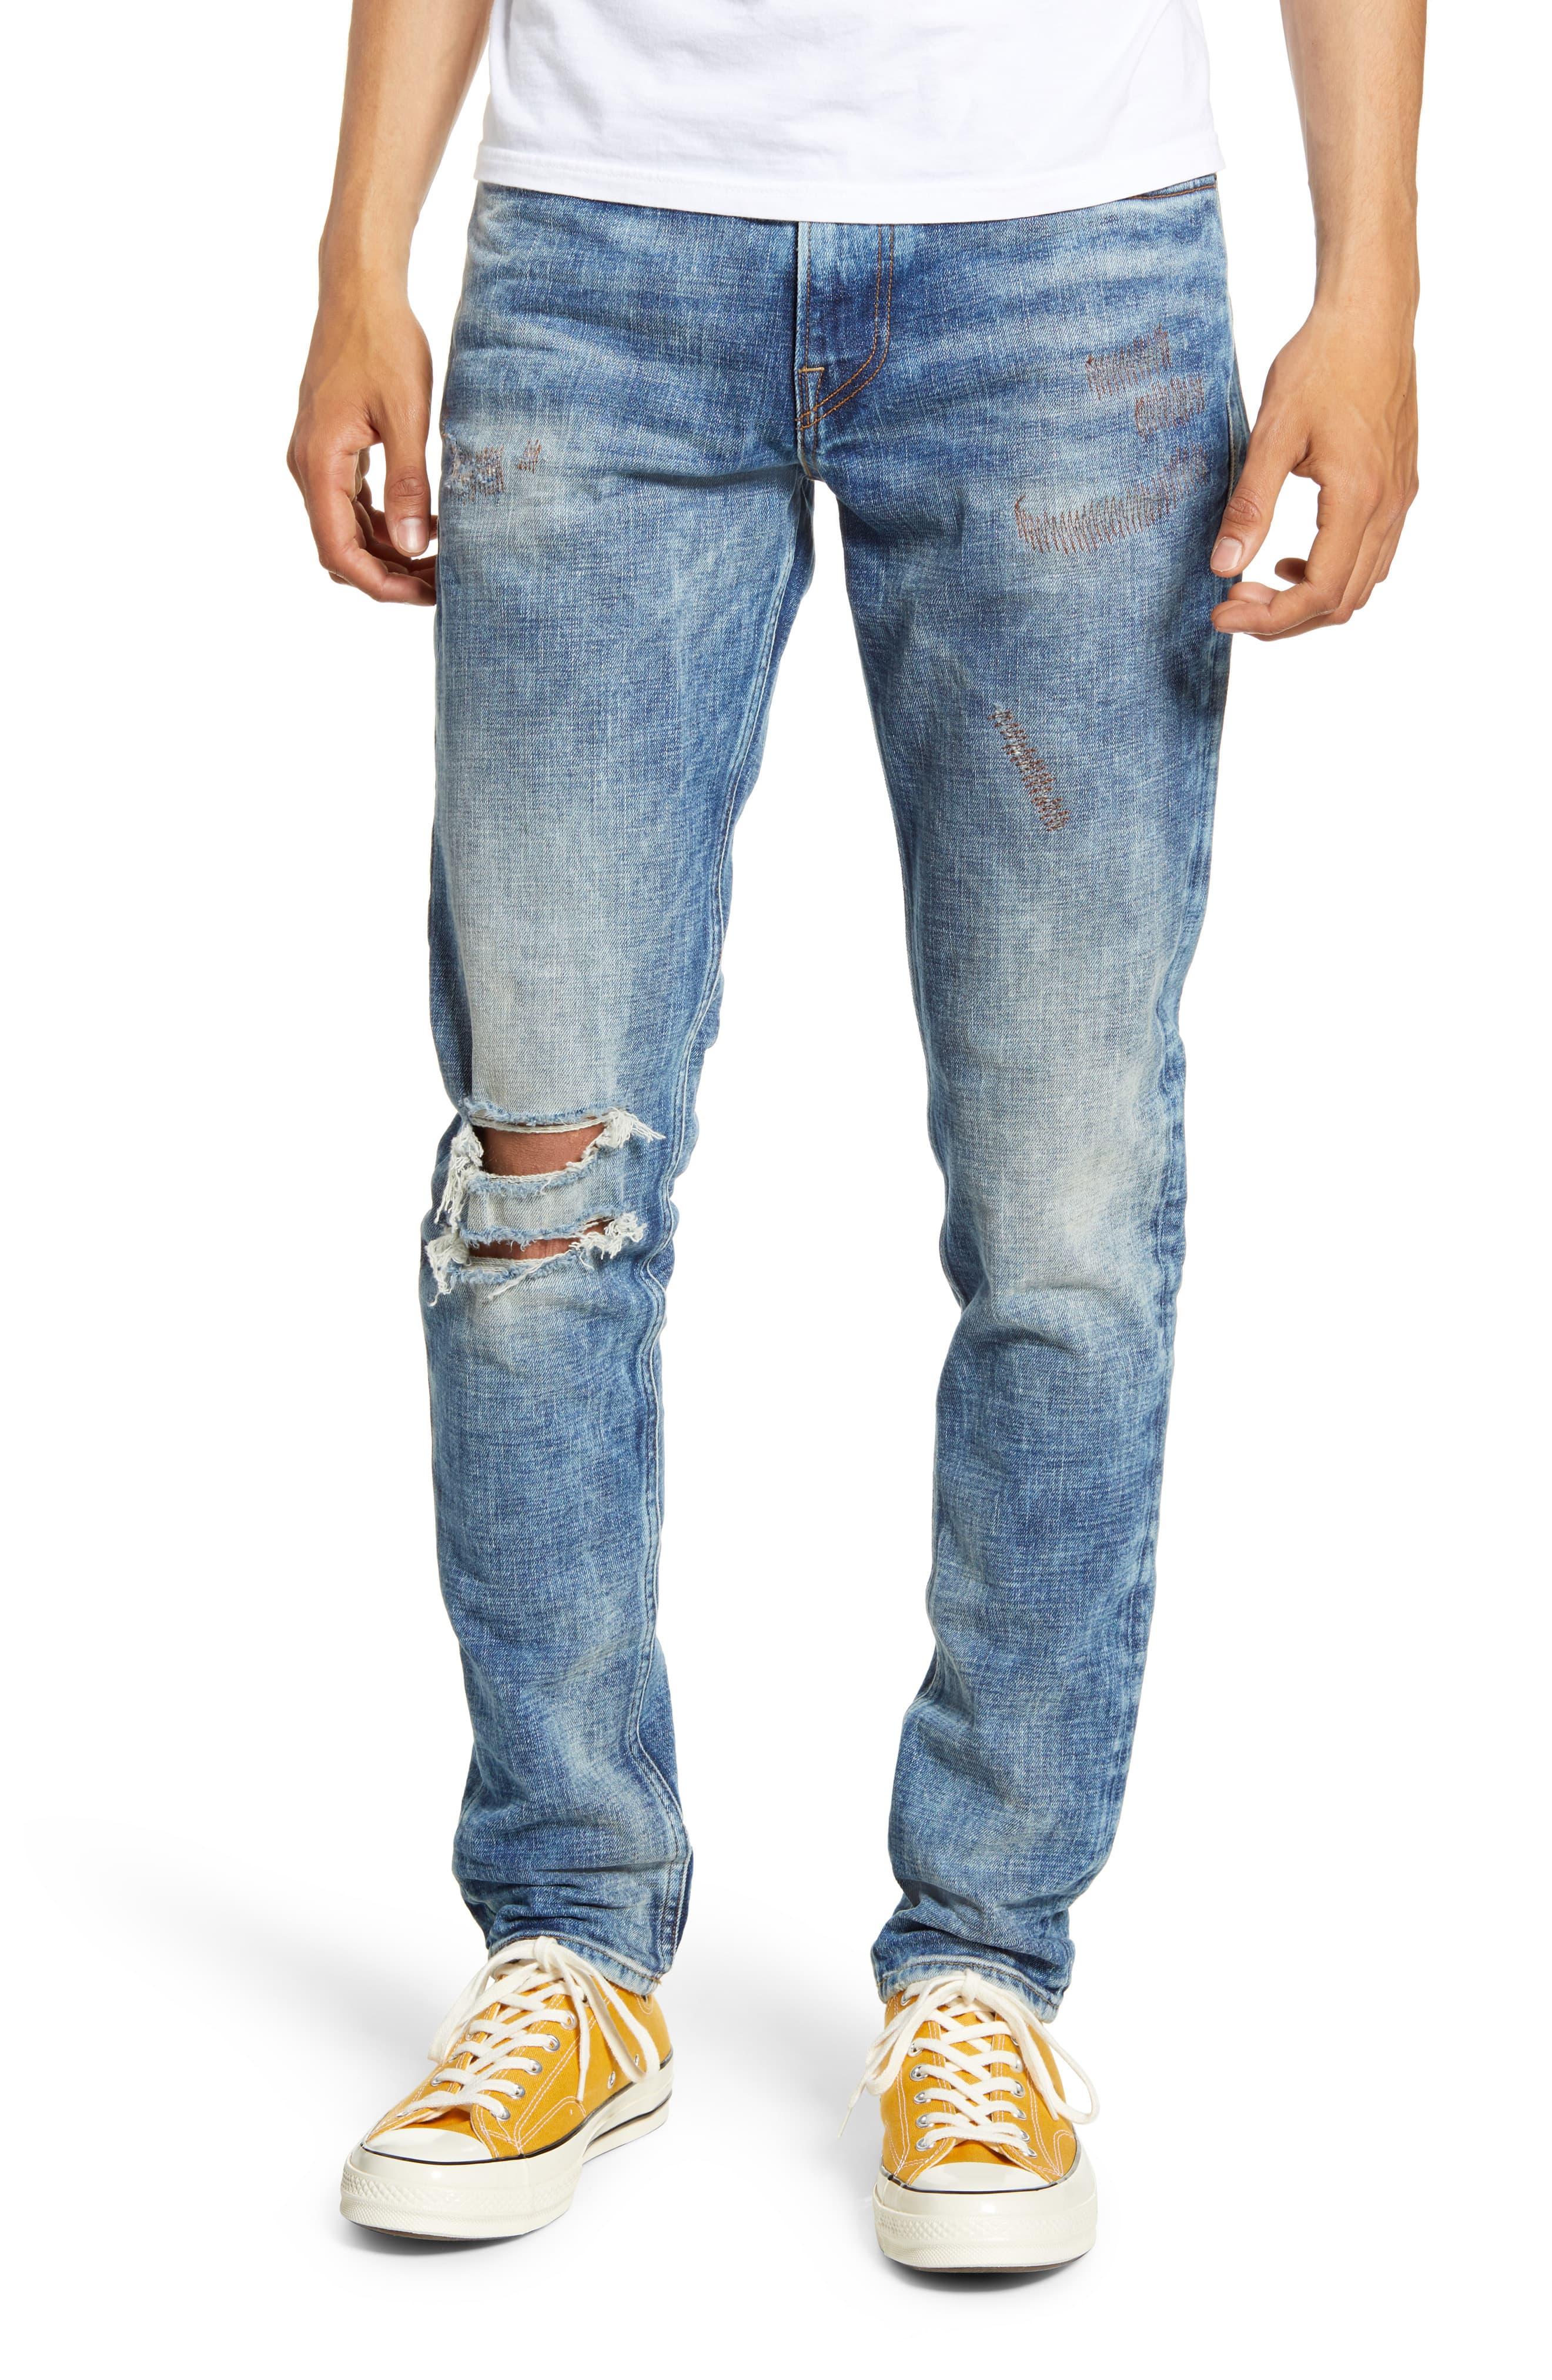 Hudson Jeans Denim Zack Ripped Skinny Fit Jeans in Blue for Men - Lyst